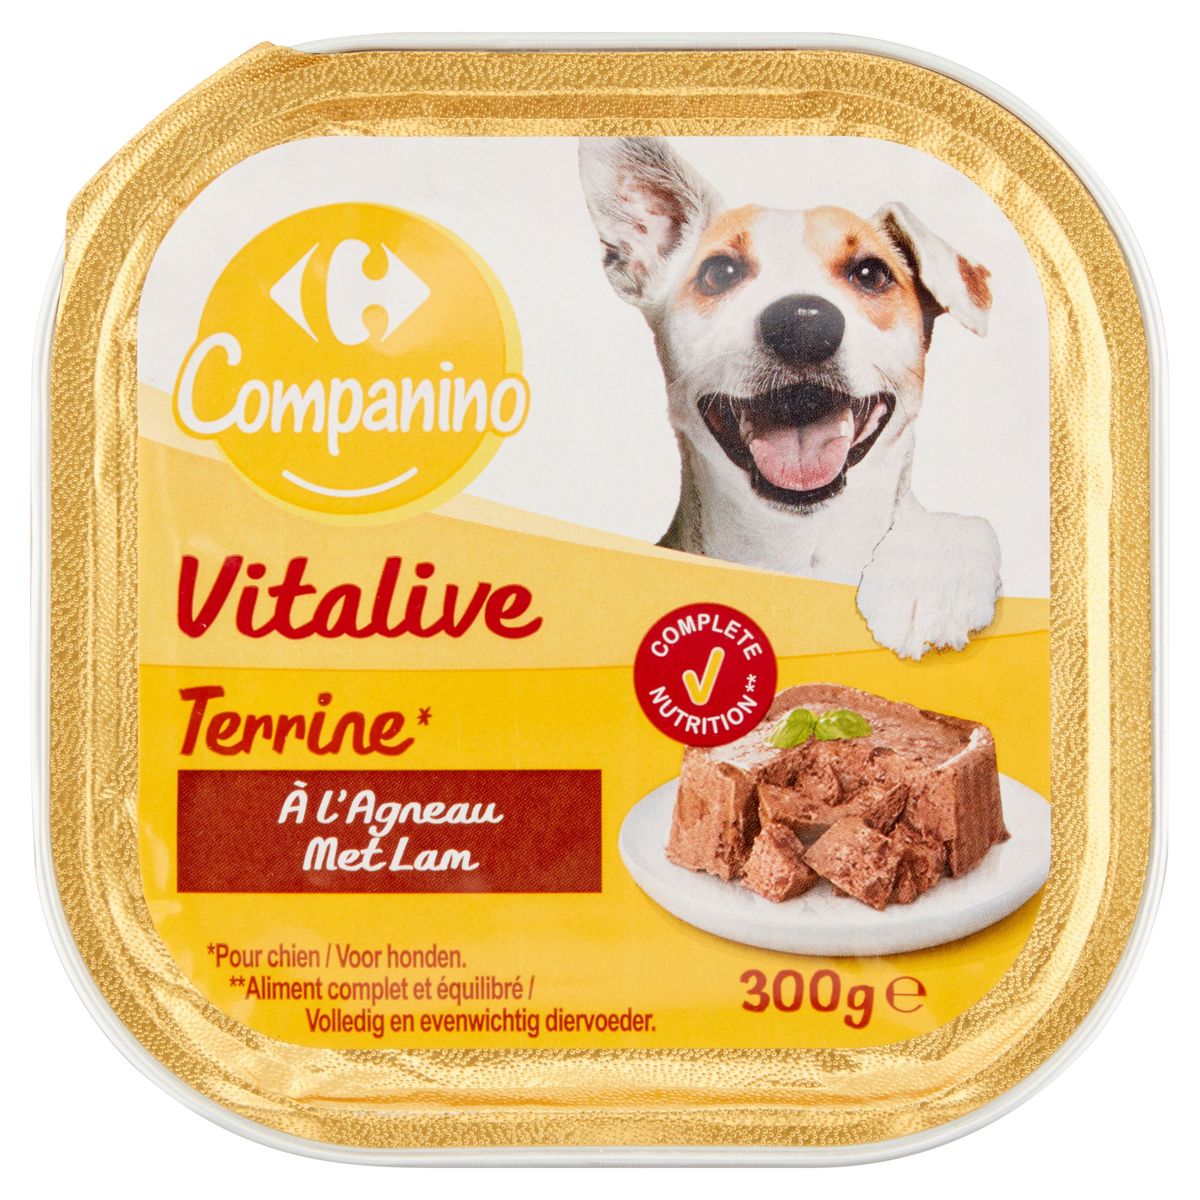 Carrefour Companino Vitalive Terrine met Lam 300 g